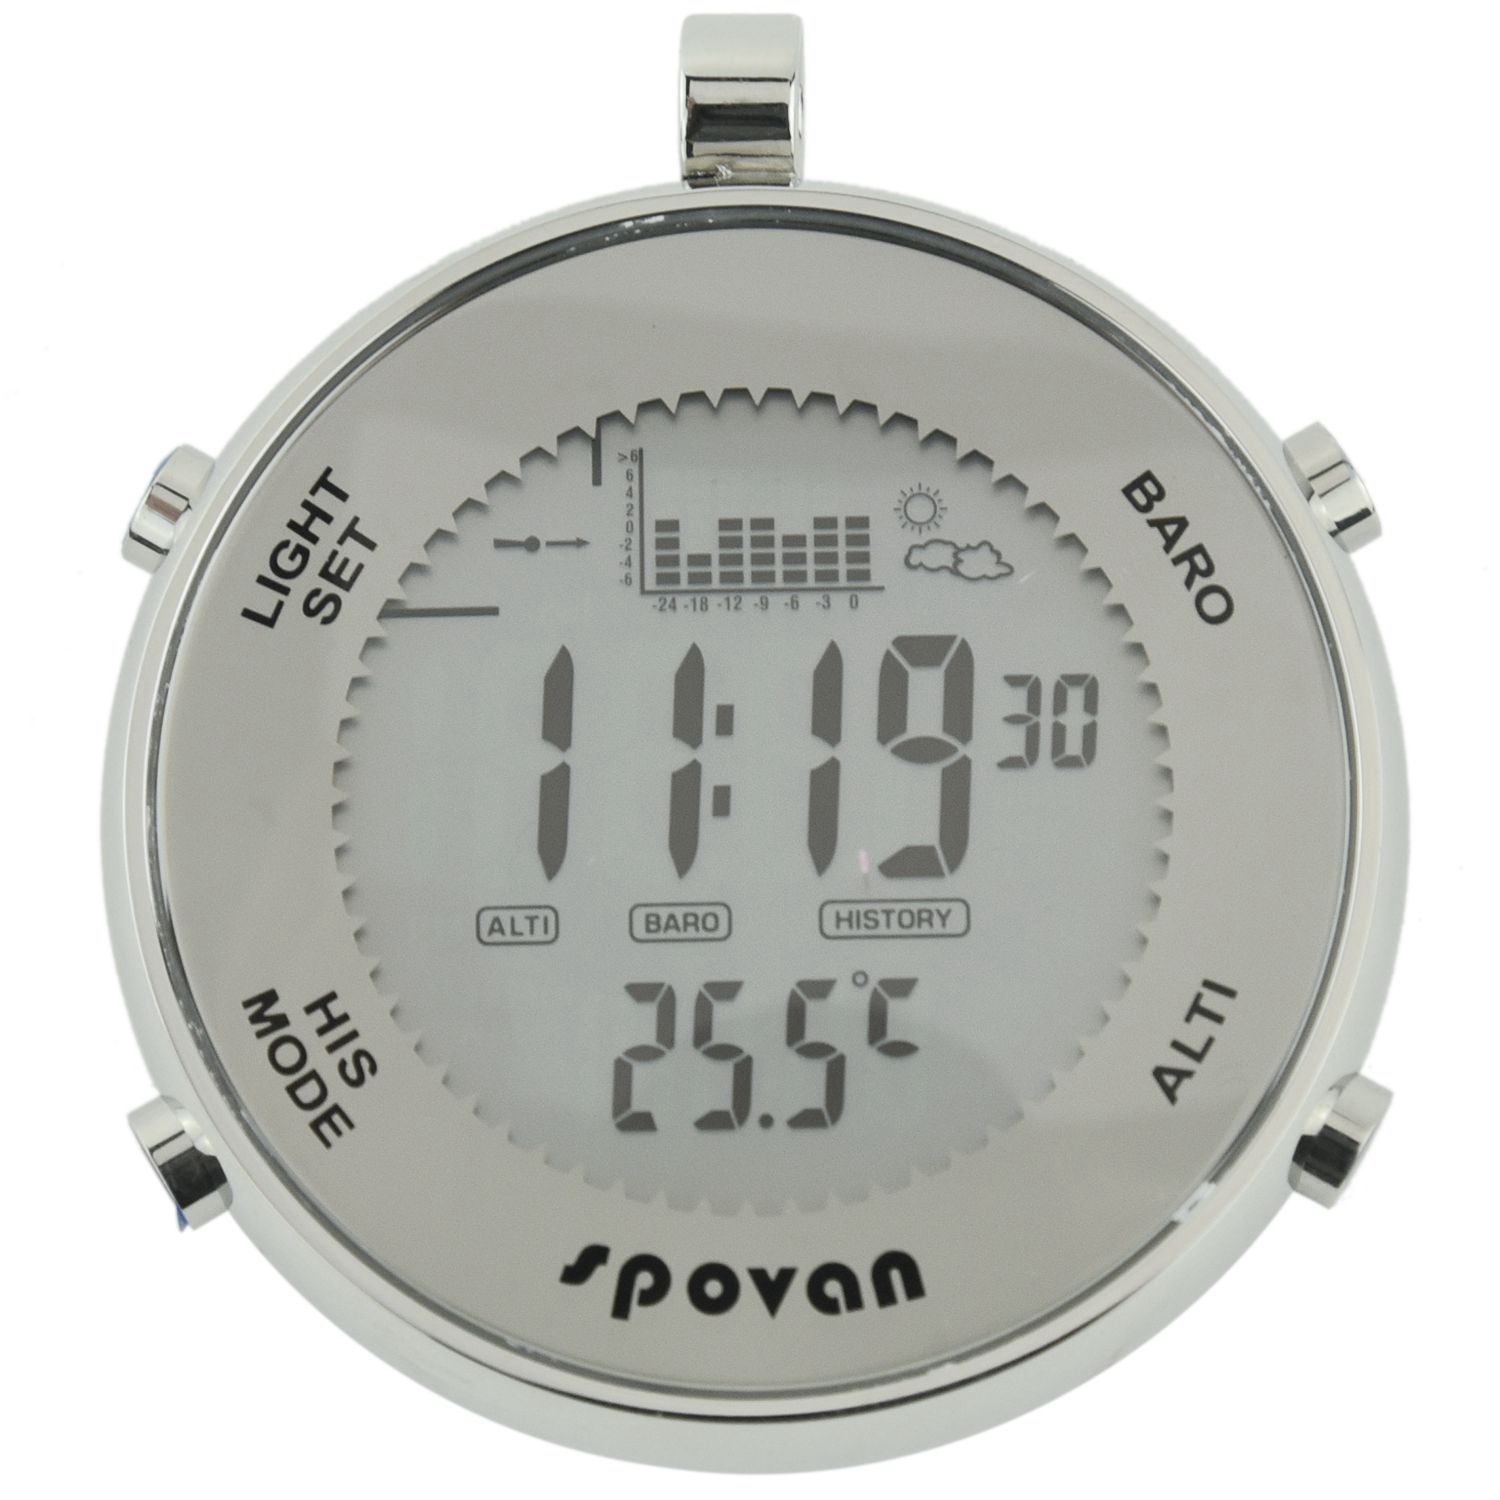 Spovan SPV600 Outdoor Waterproof Pocket Watch Unisex